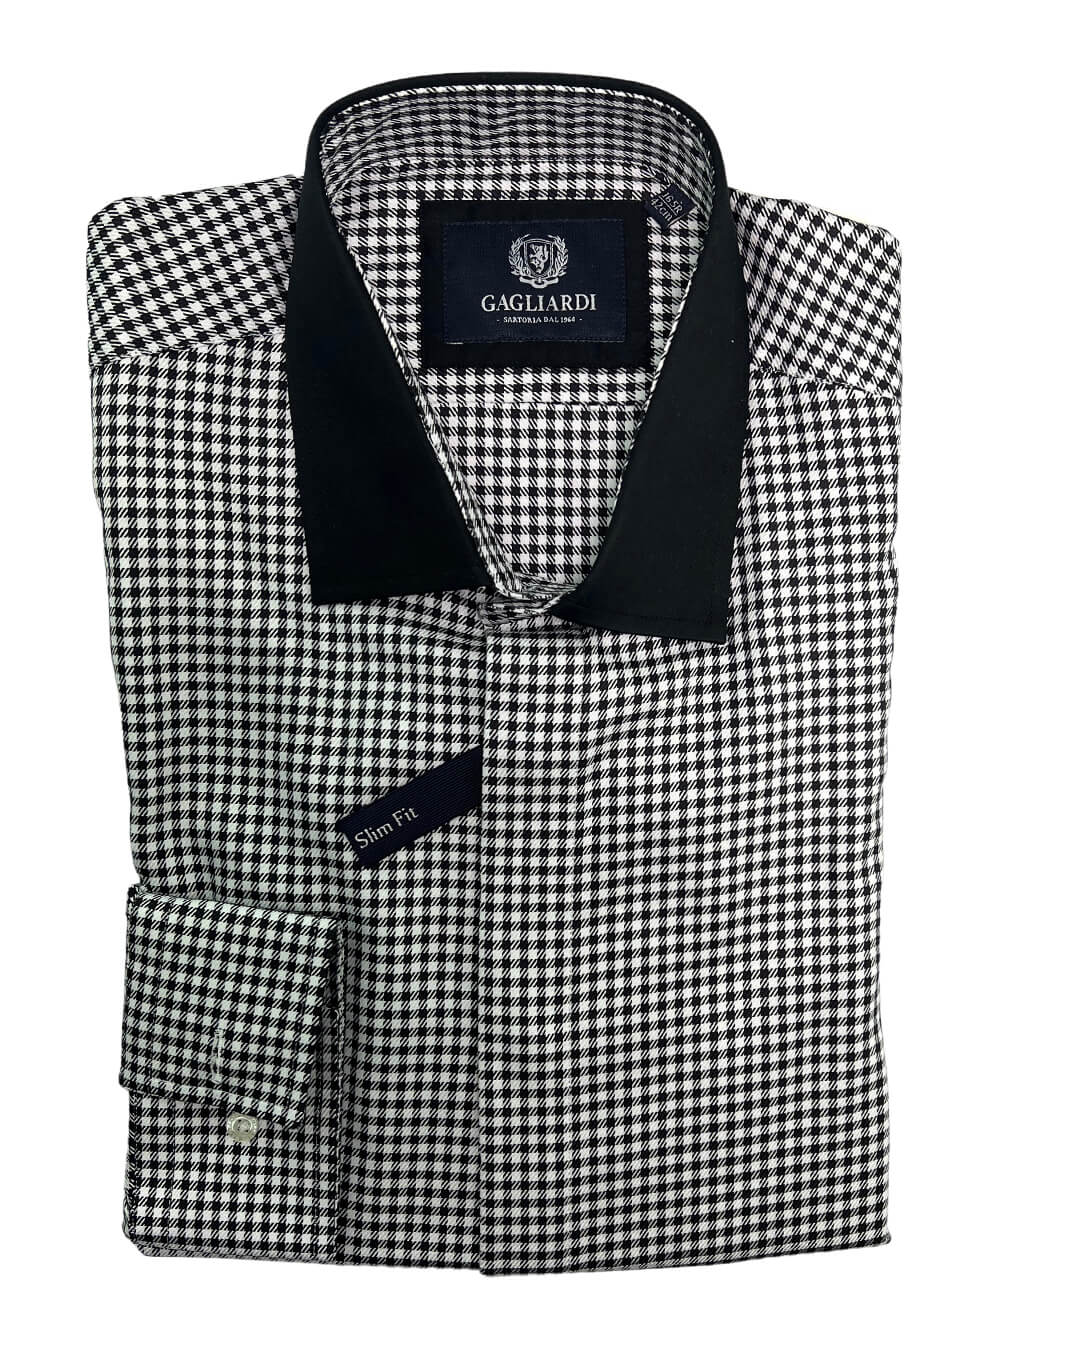 Gagliardi Shirts Gagliardi Black & White Oversized Gingham Classic Collar Shirt